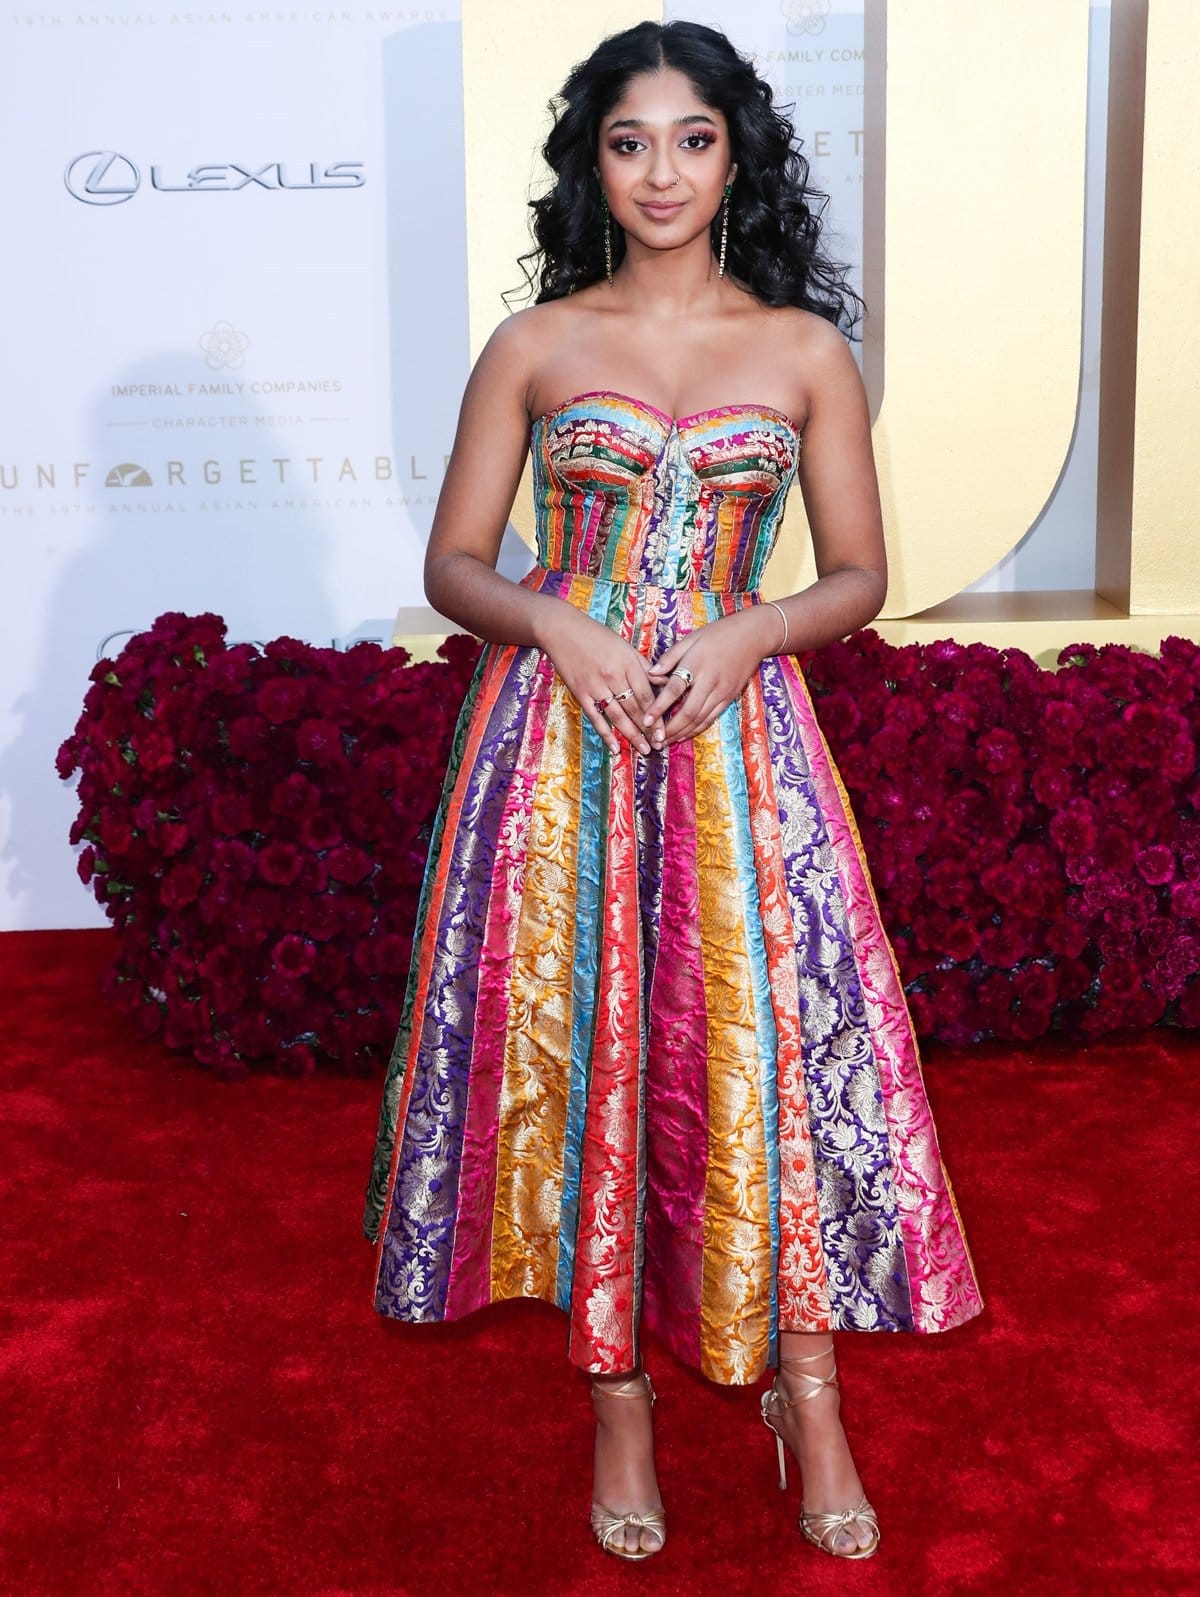 Canadian actress Maitreyi Ramakrishnan in a rainbow upcycled fabric dress from Indian designer Ashwin Thiyagarajan at the 19th Annual Unforgettable Gala Asian American Awards